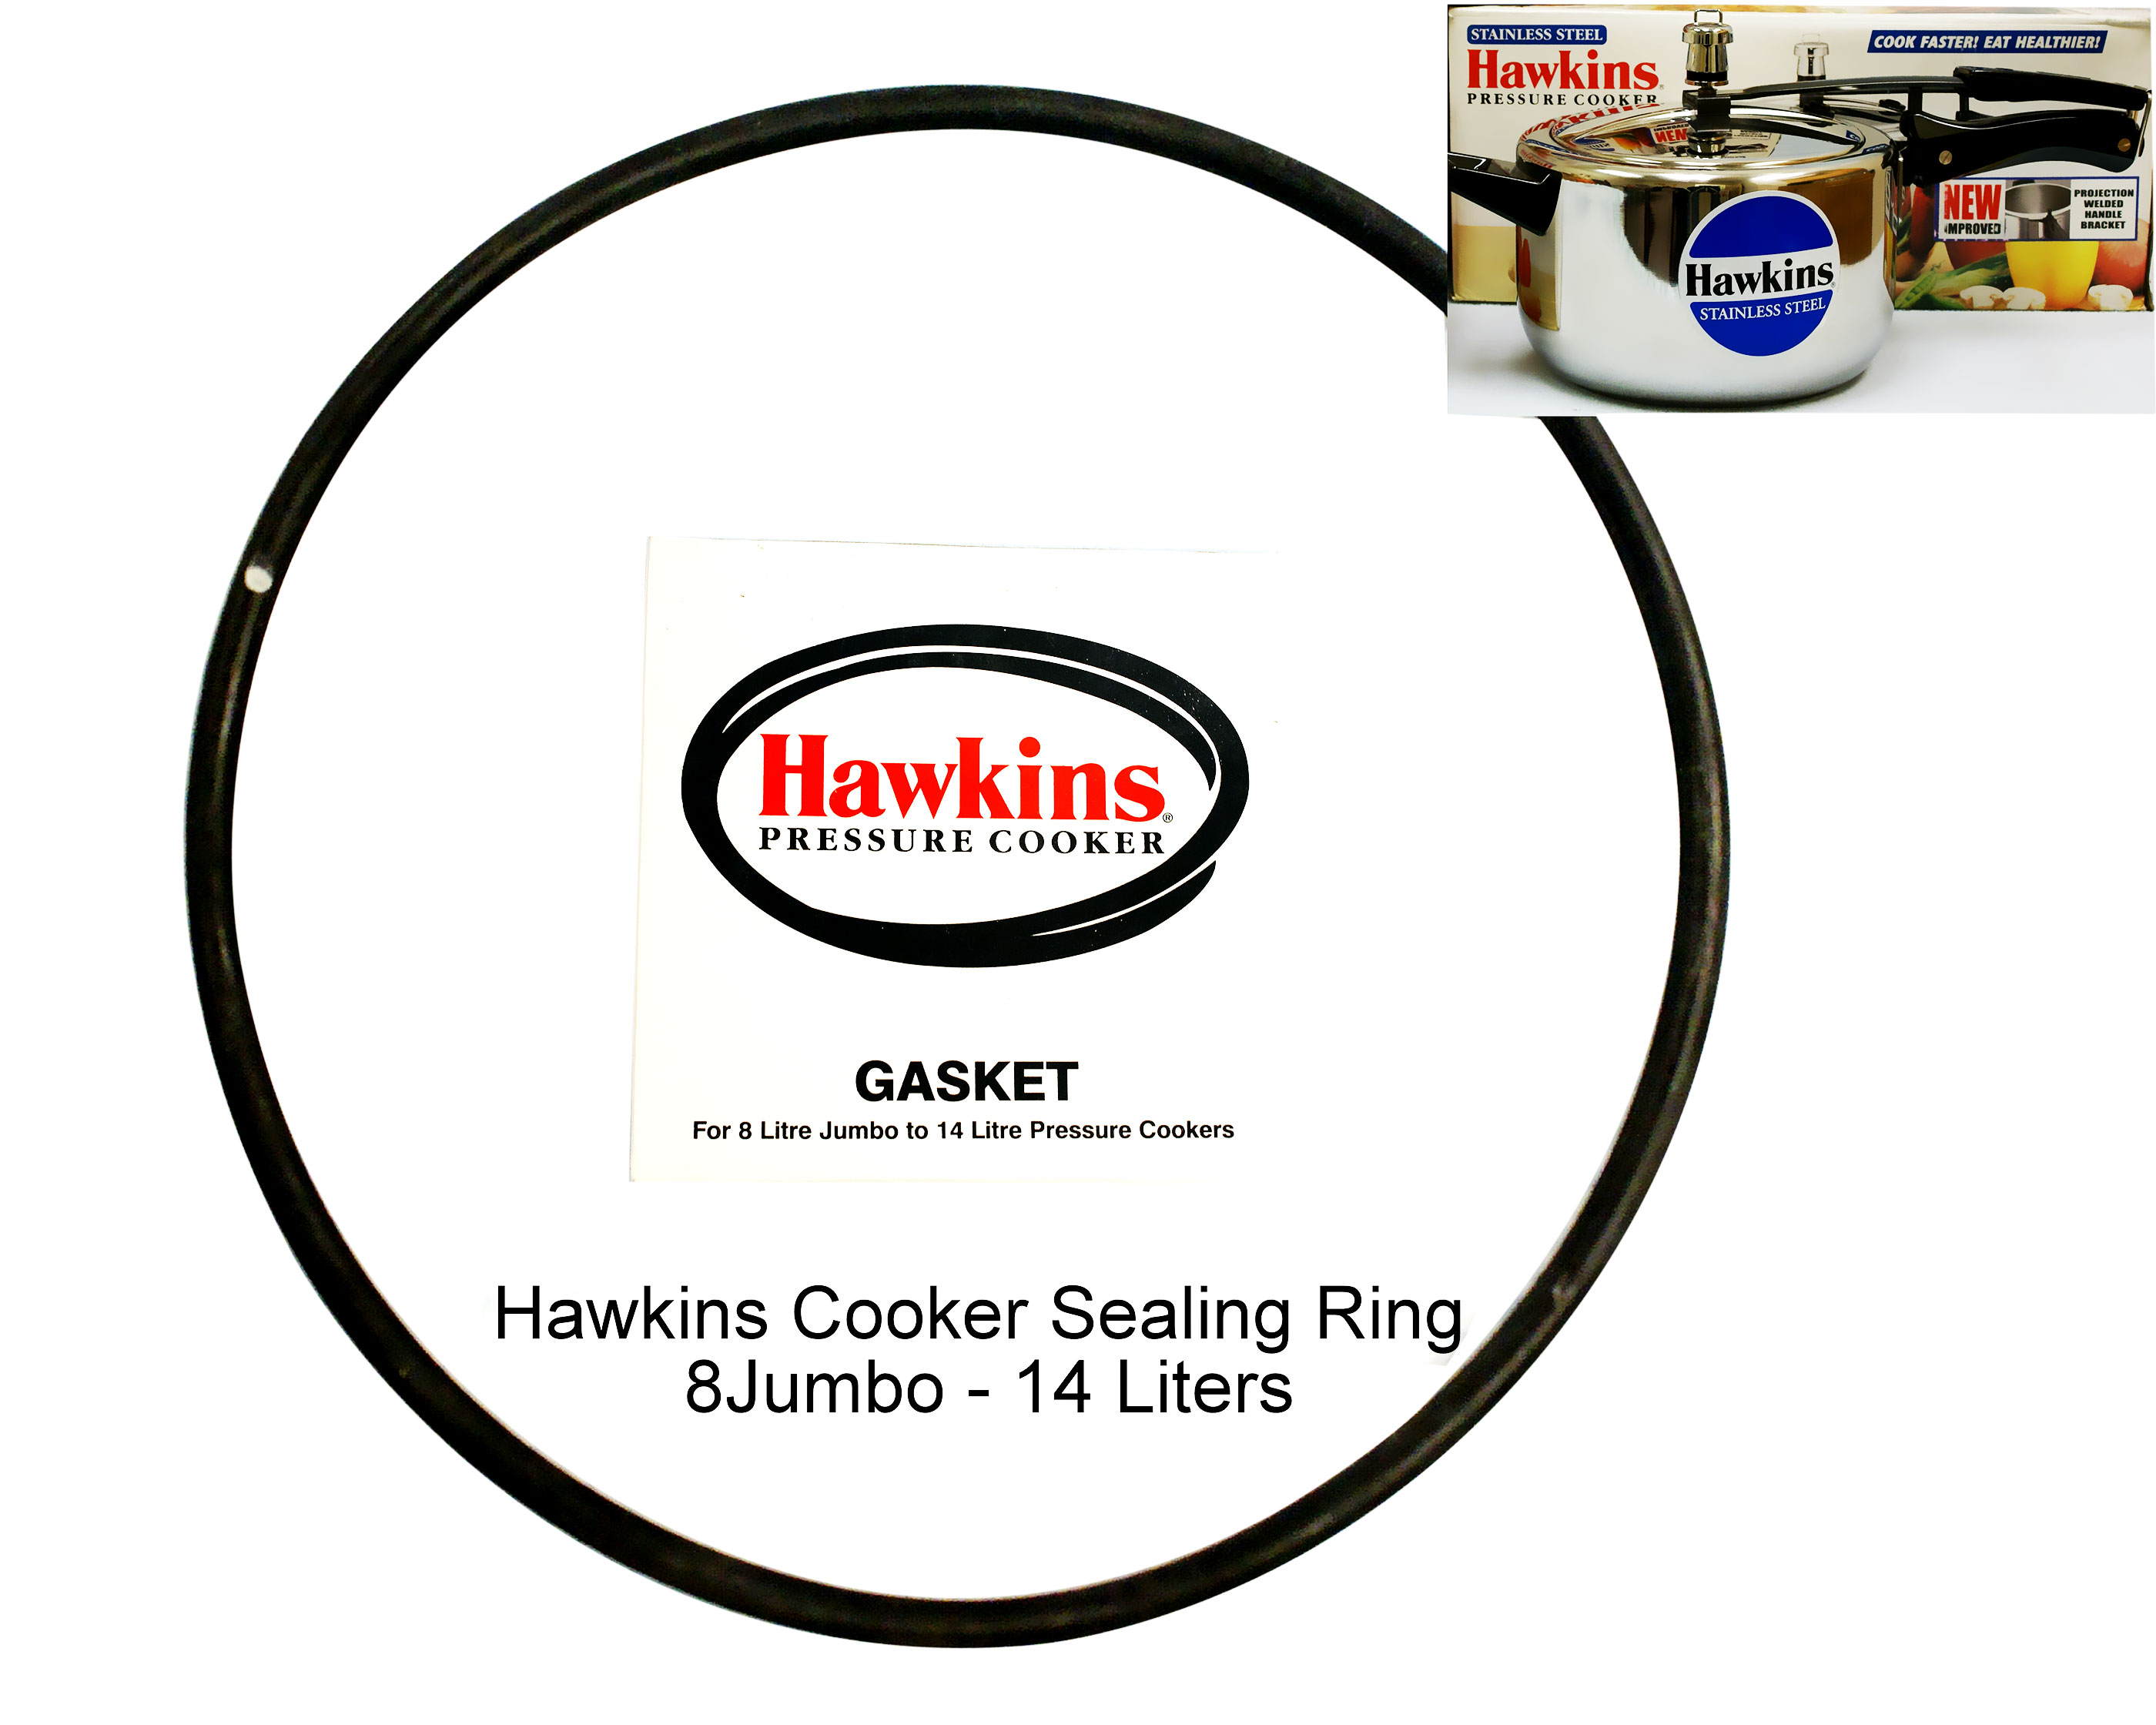 Hawkins Sealing Ring for 8J-14 Liters D10-09